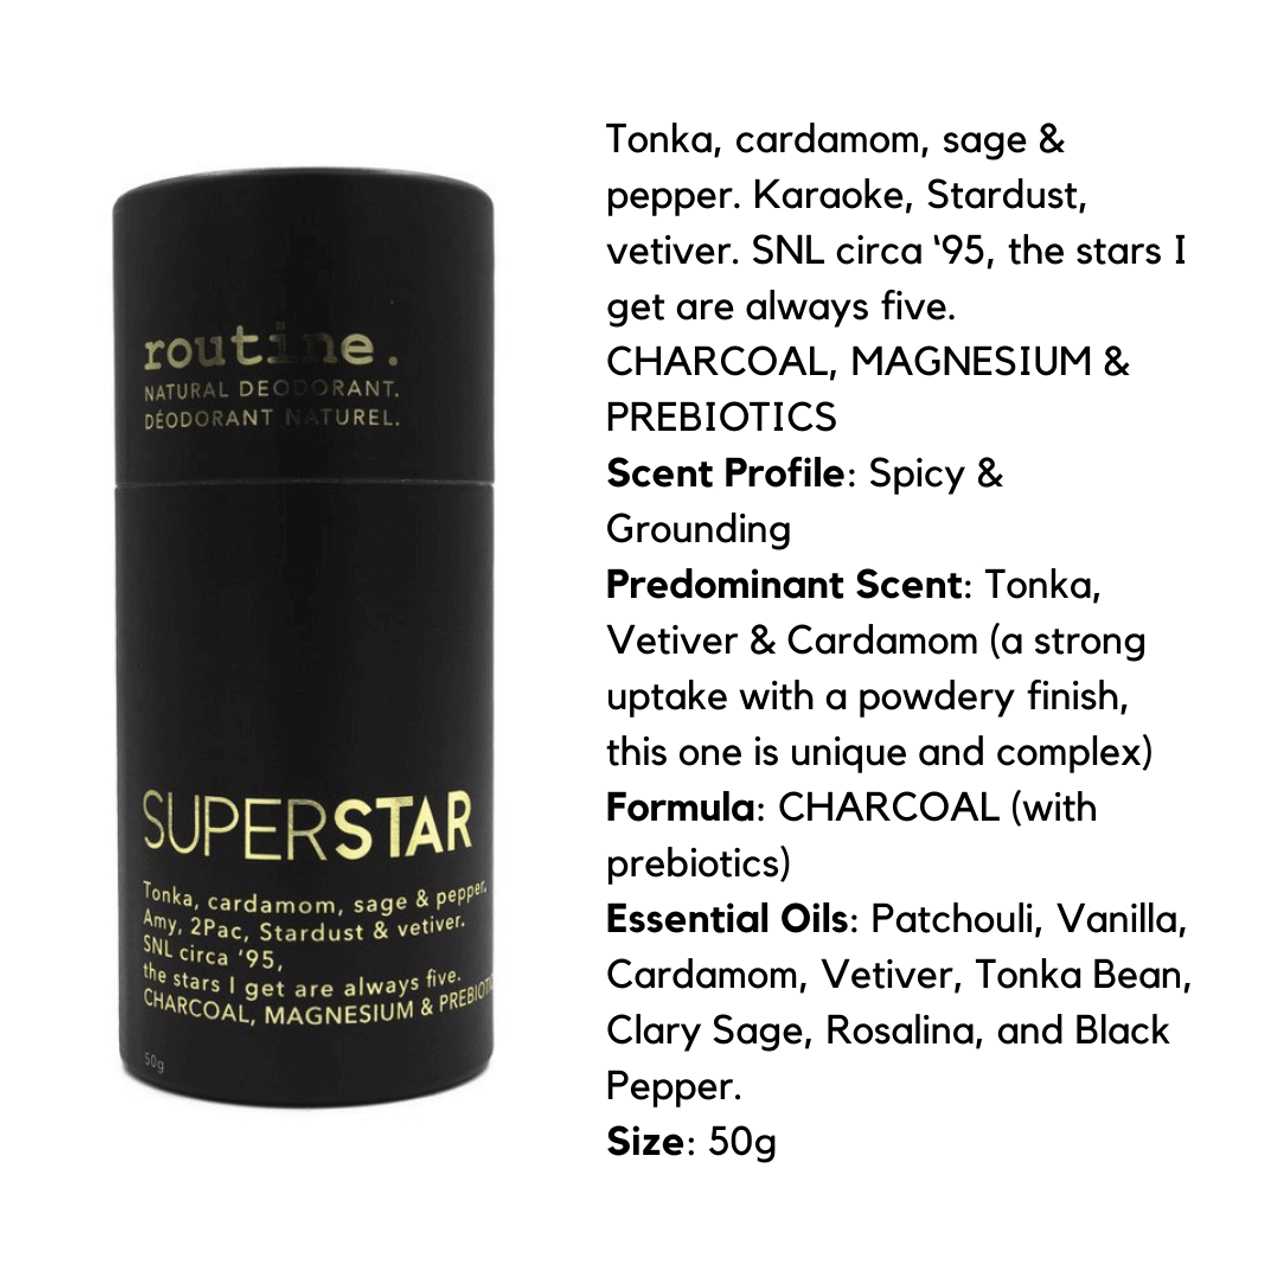 Routine Superstar Deodorant - Nutrition Plus